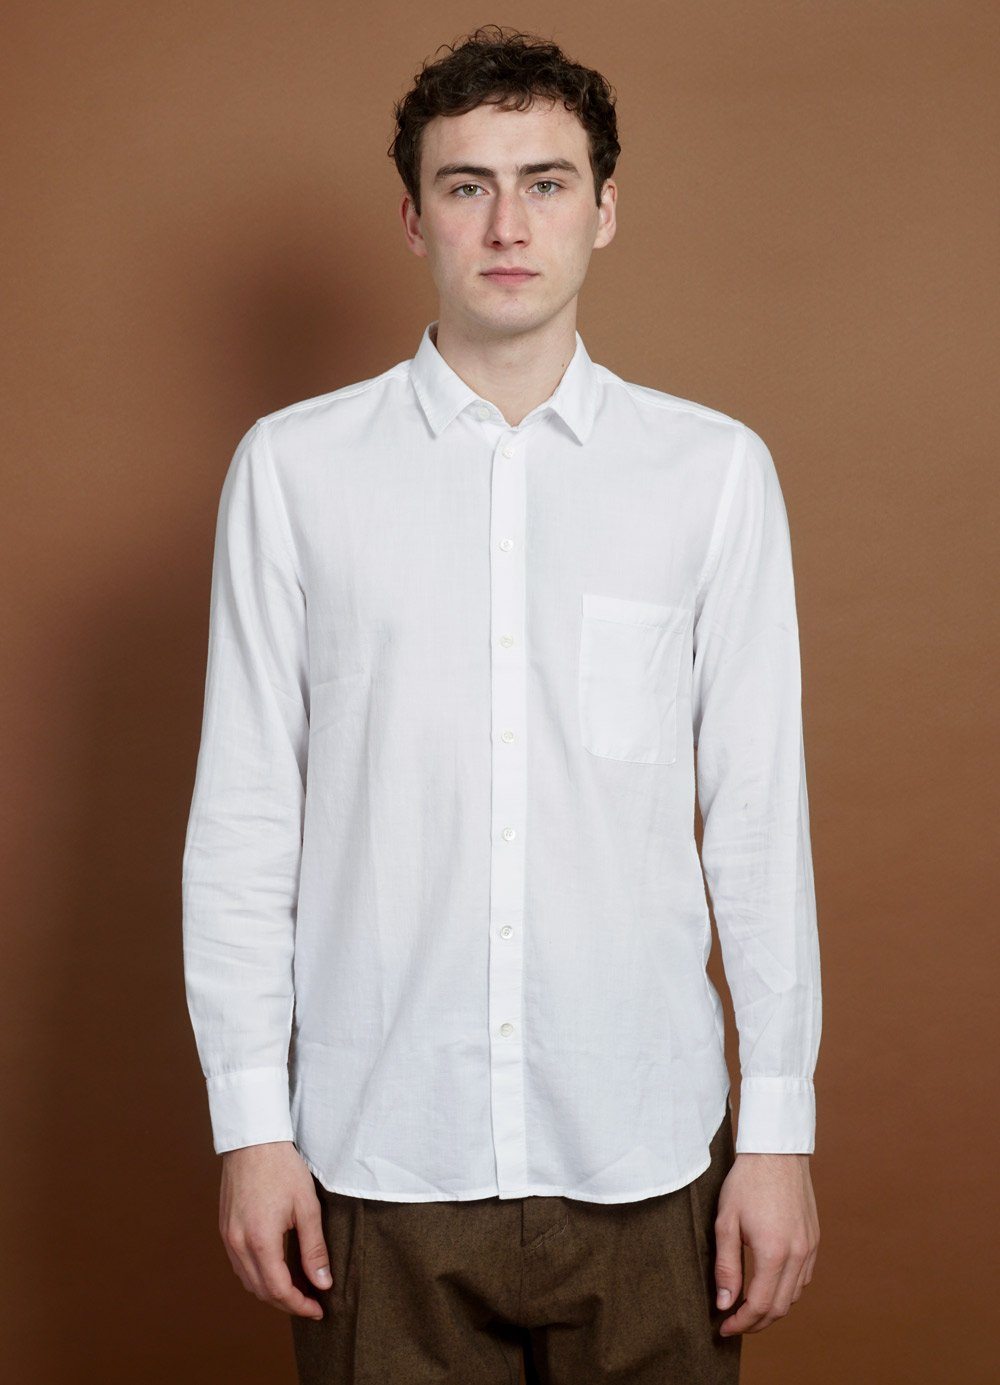 HANSEN Garments - HENNING | Casual Classic Shirt | White - HANSEN Garments